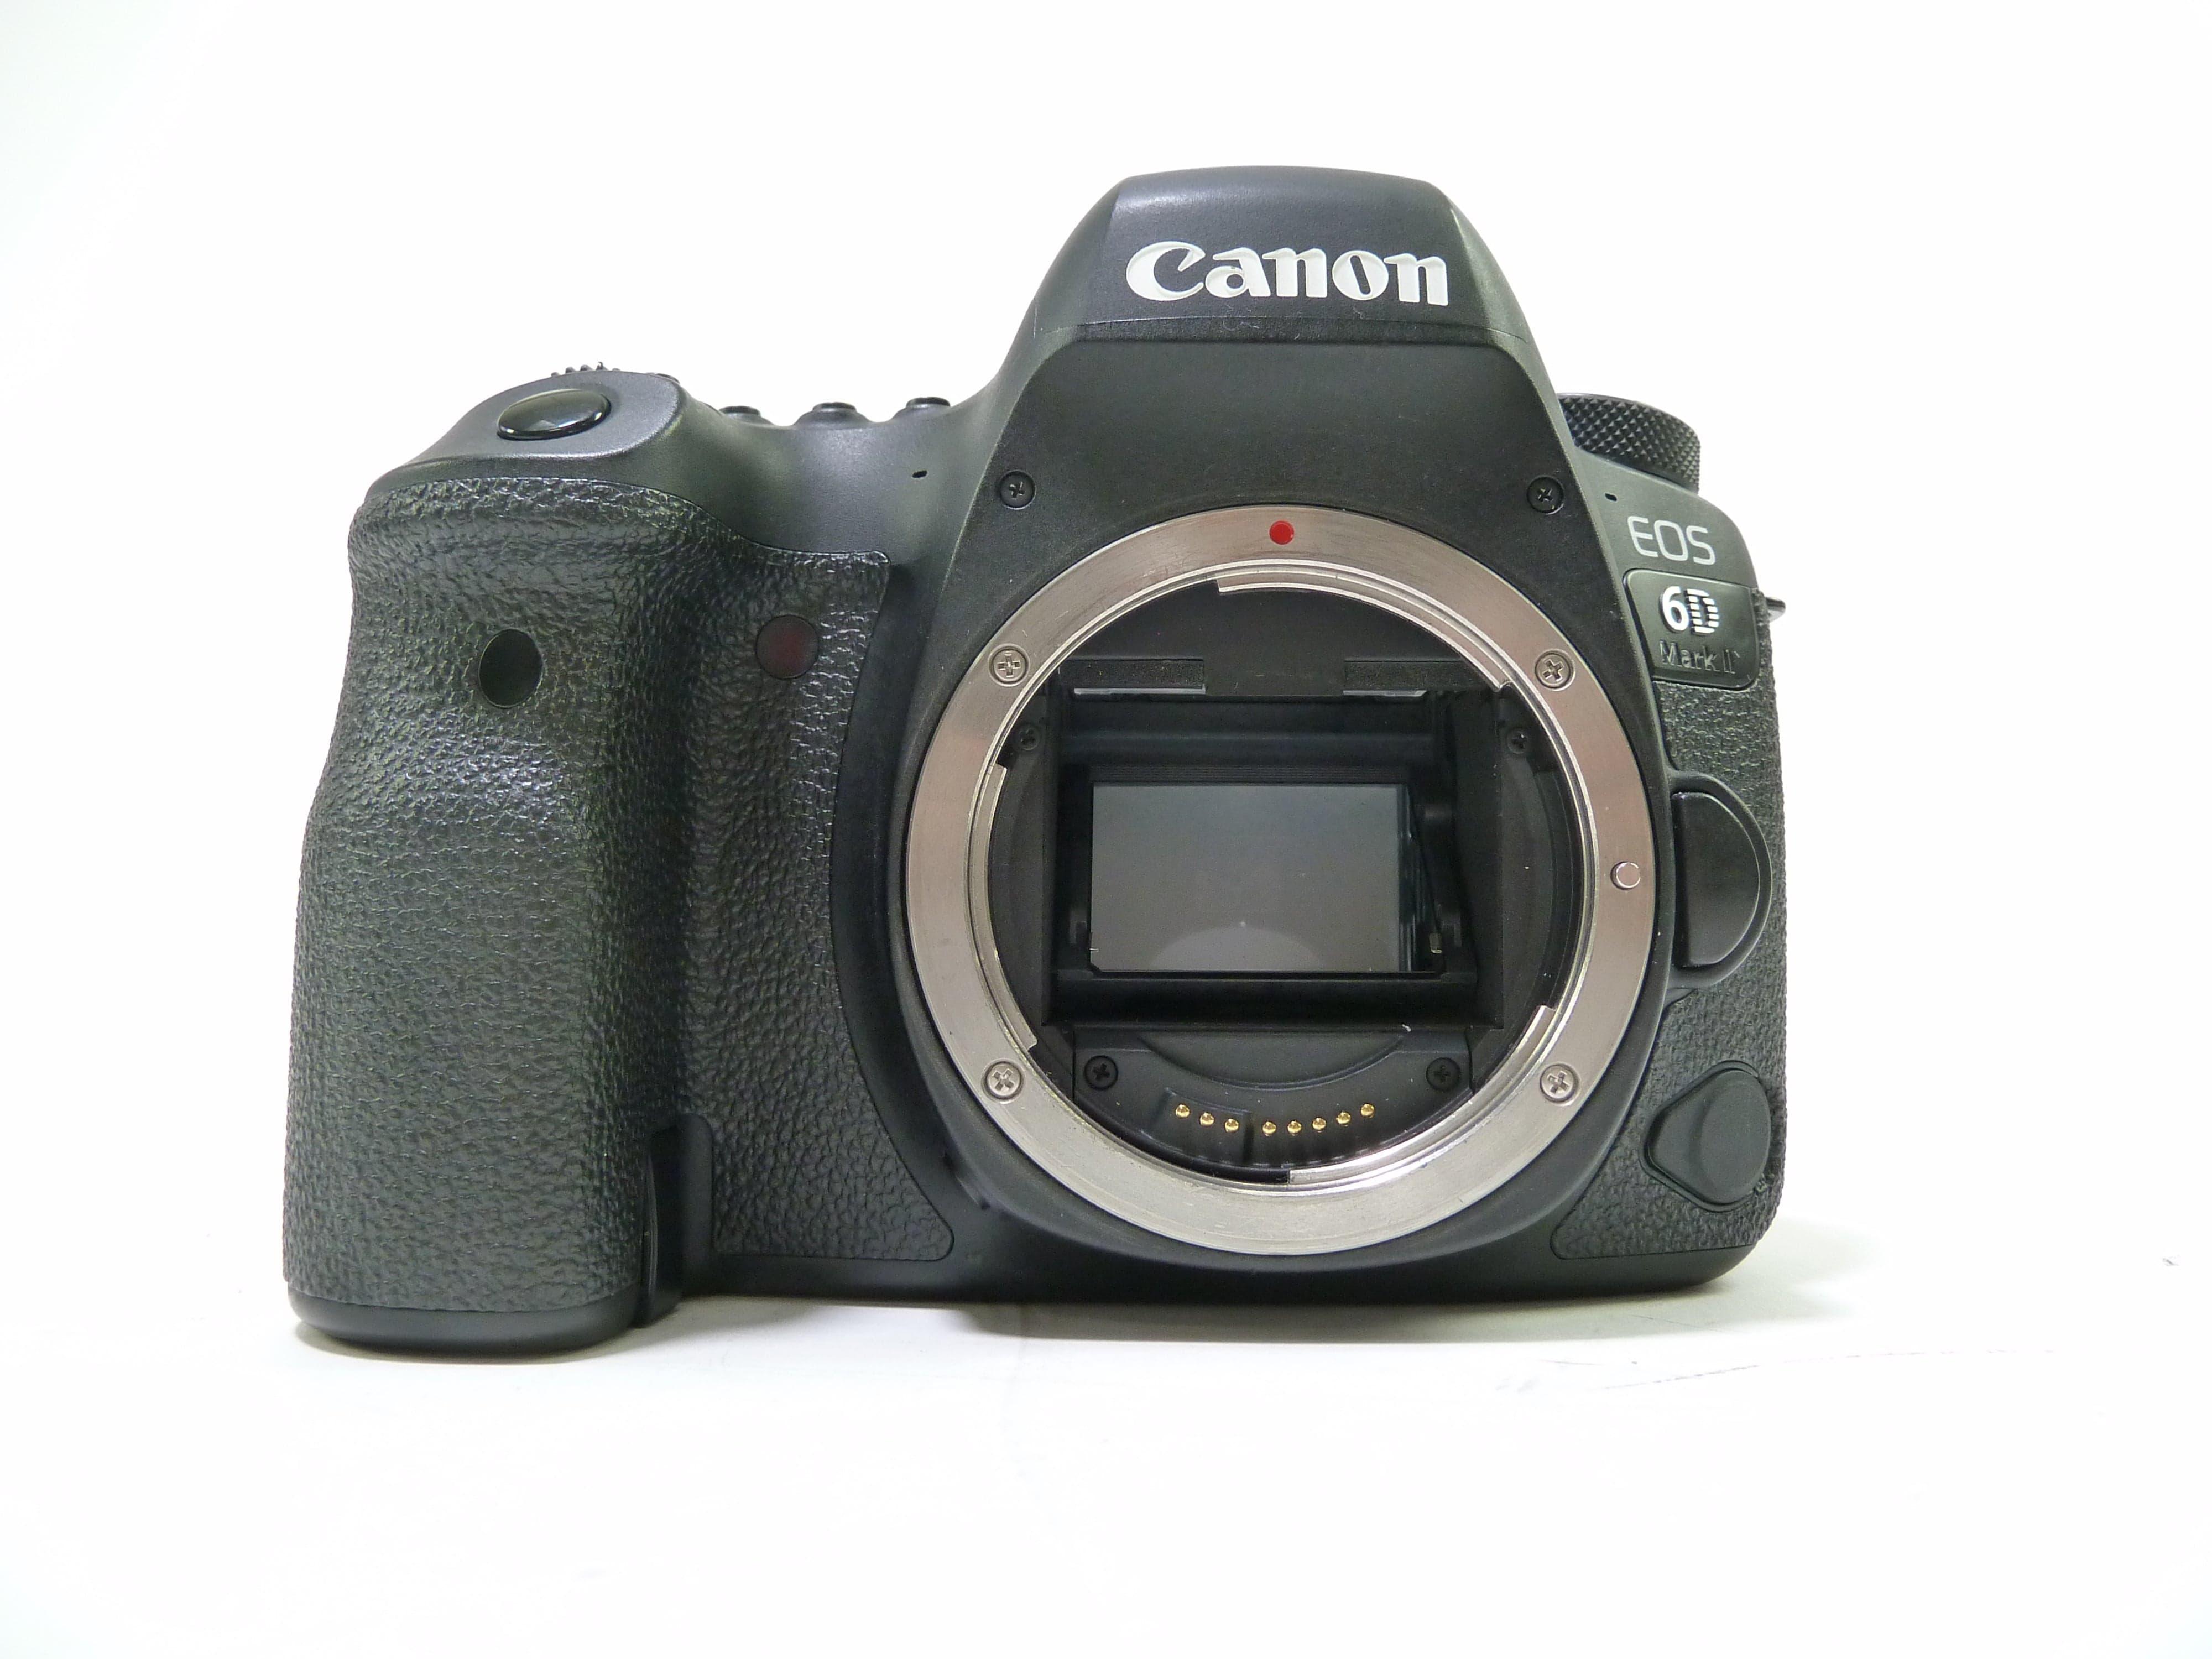 Canon EOS 6D Mark II (Body Only) - Black 